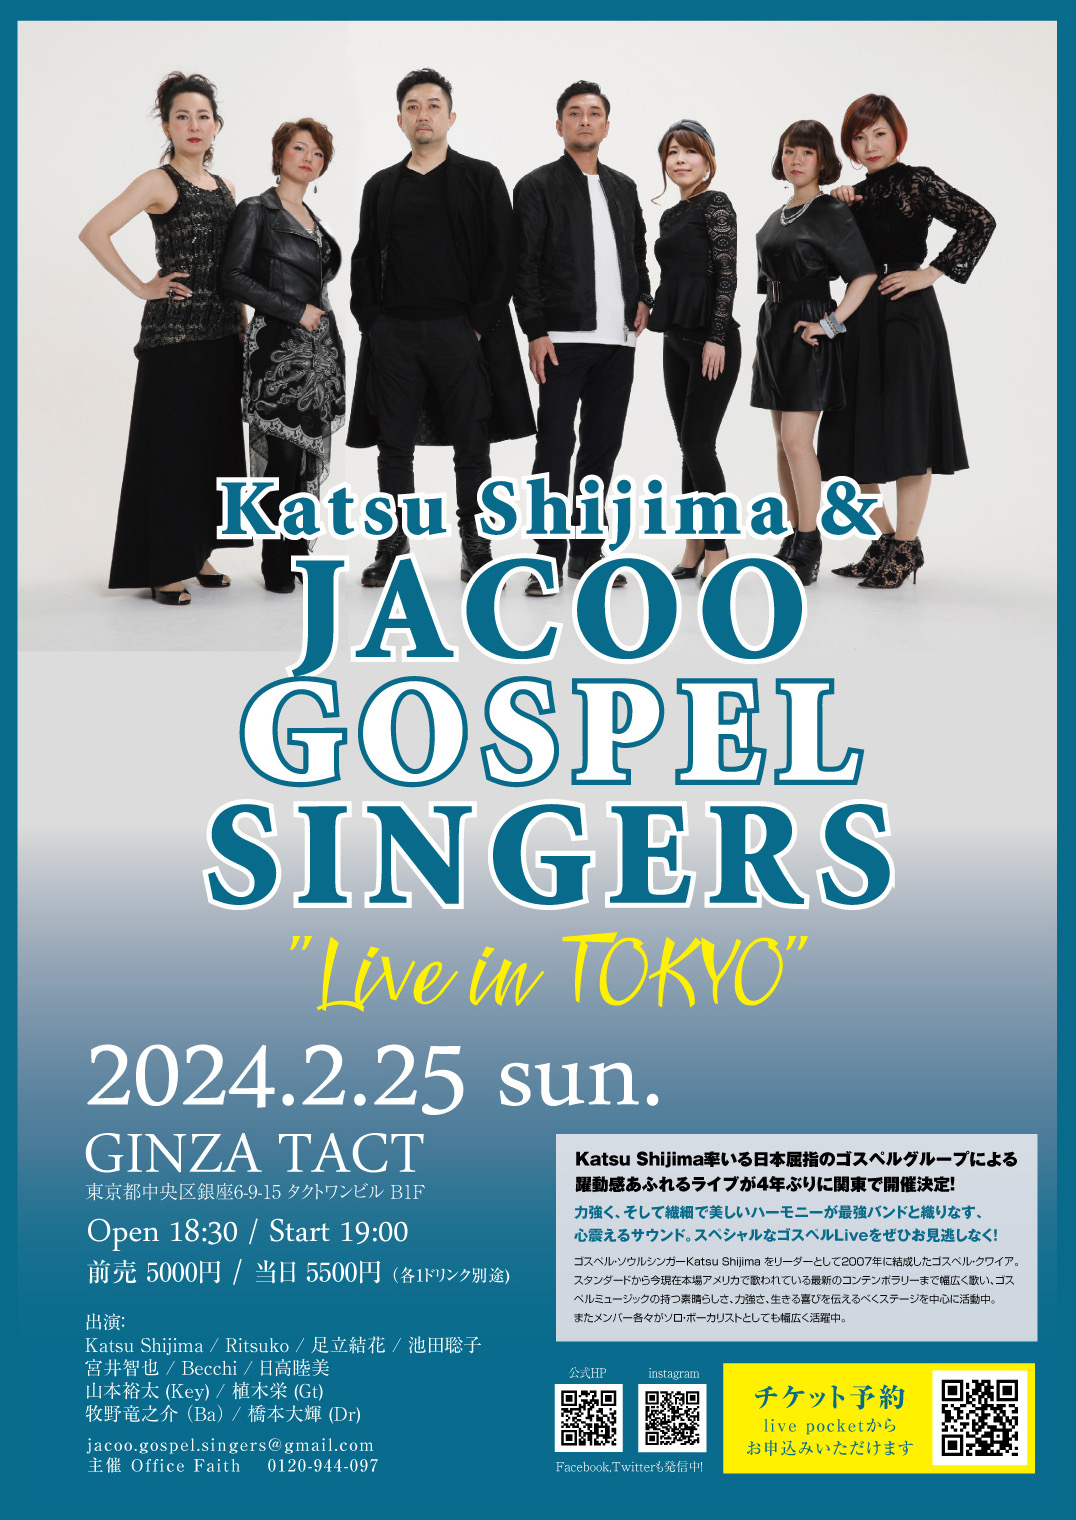 Katsu Shijima & JACOO Gospel Singers LIVE in Tokyo